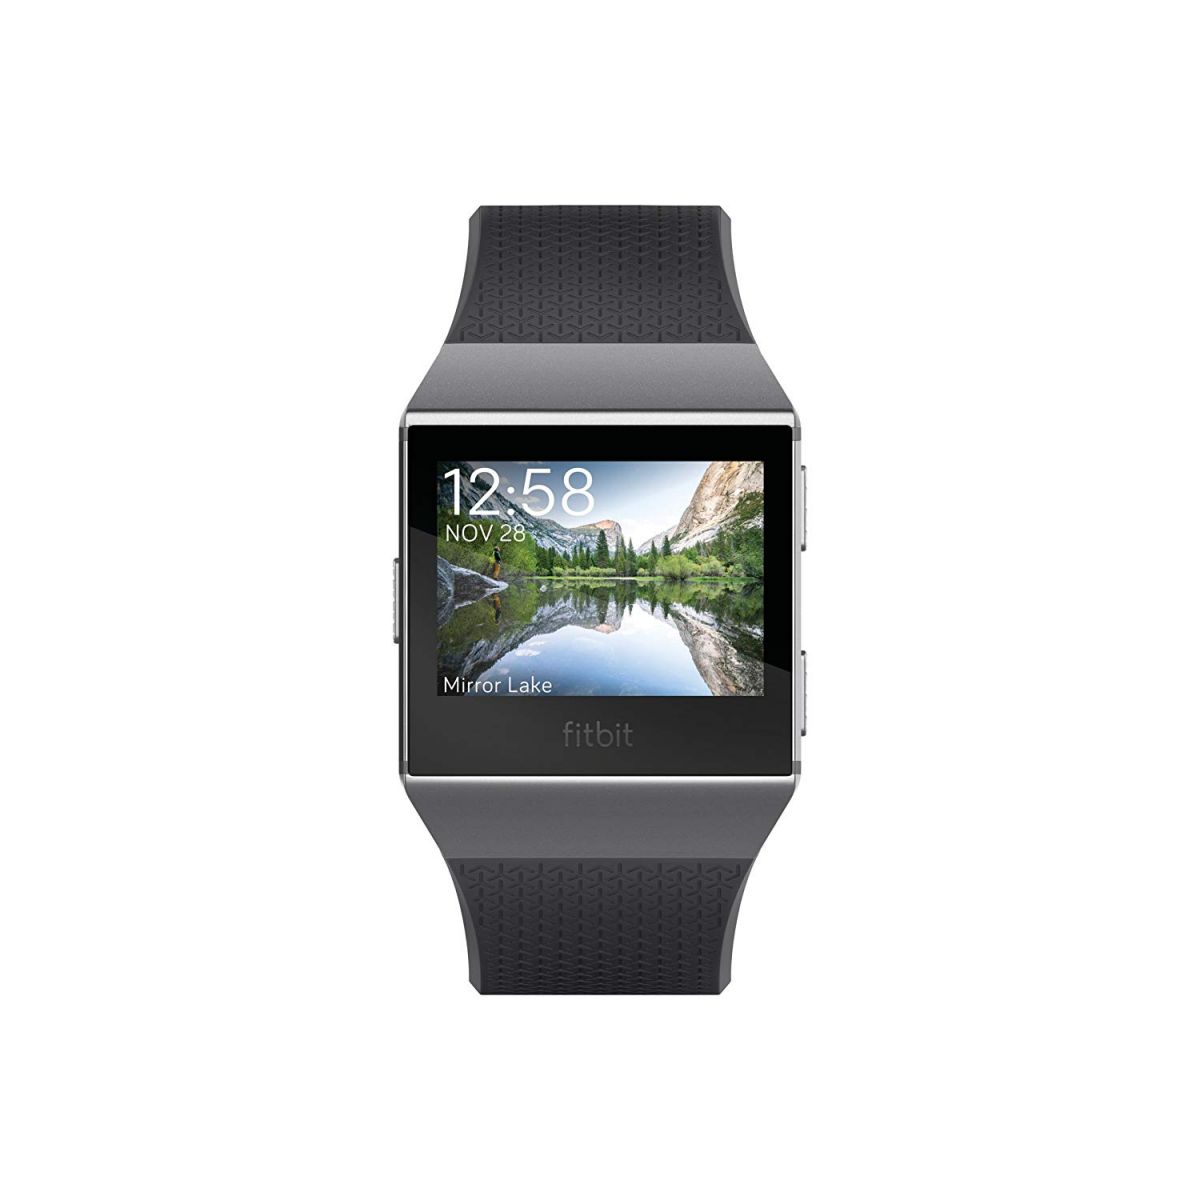 Smartwatch Fitbit ionic chống nước 5ATM